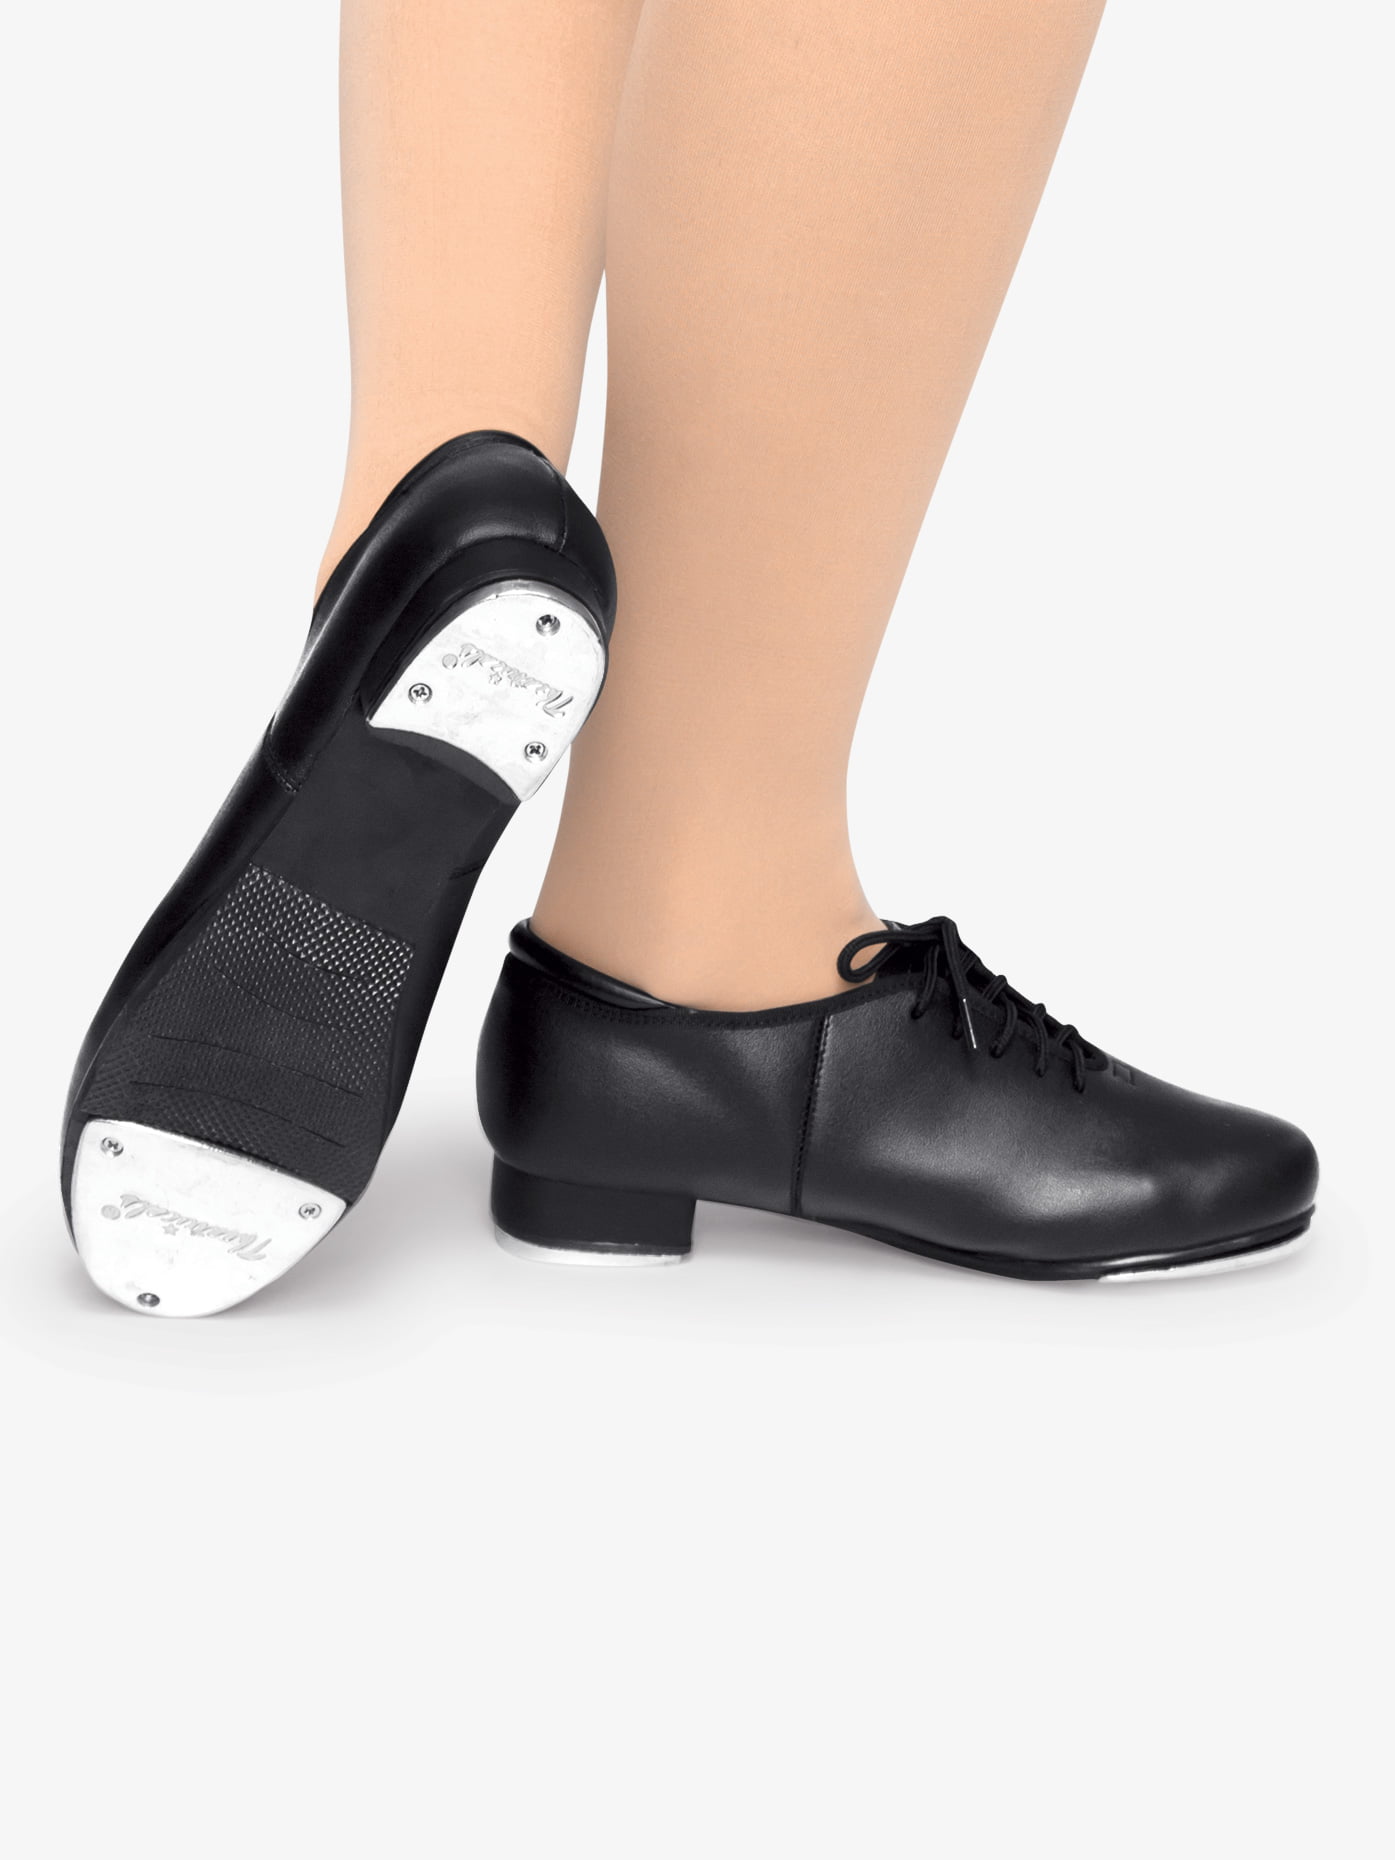 Toddler/Little/Big Kid Joocare Child Lace Up Beginner Tap Dance Shoes Unisex